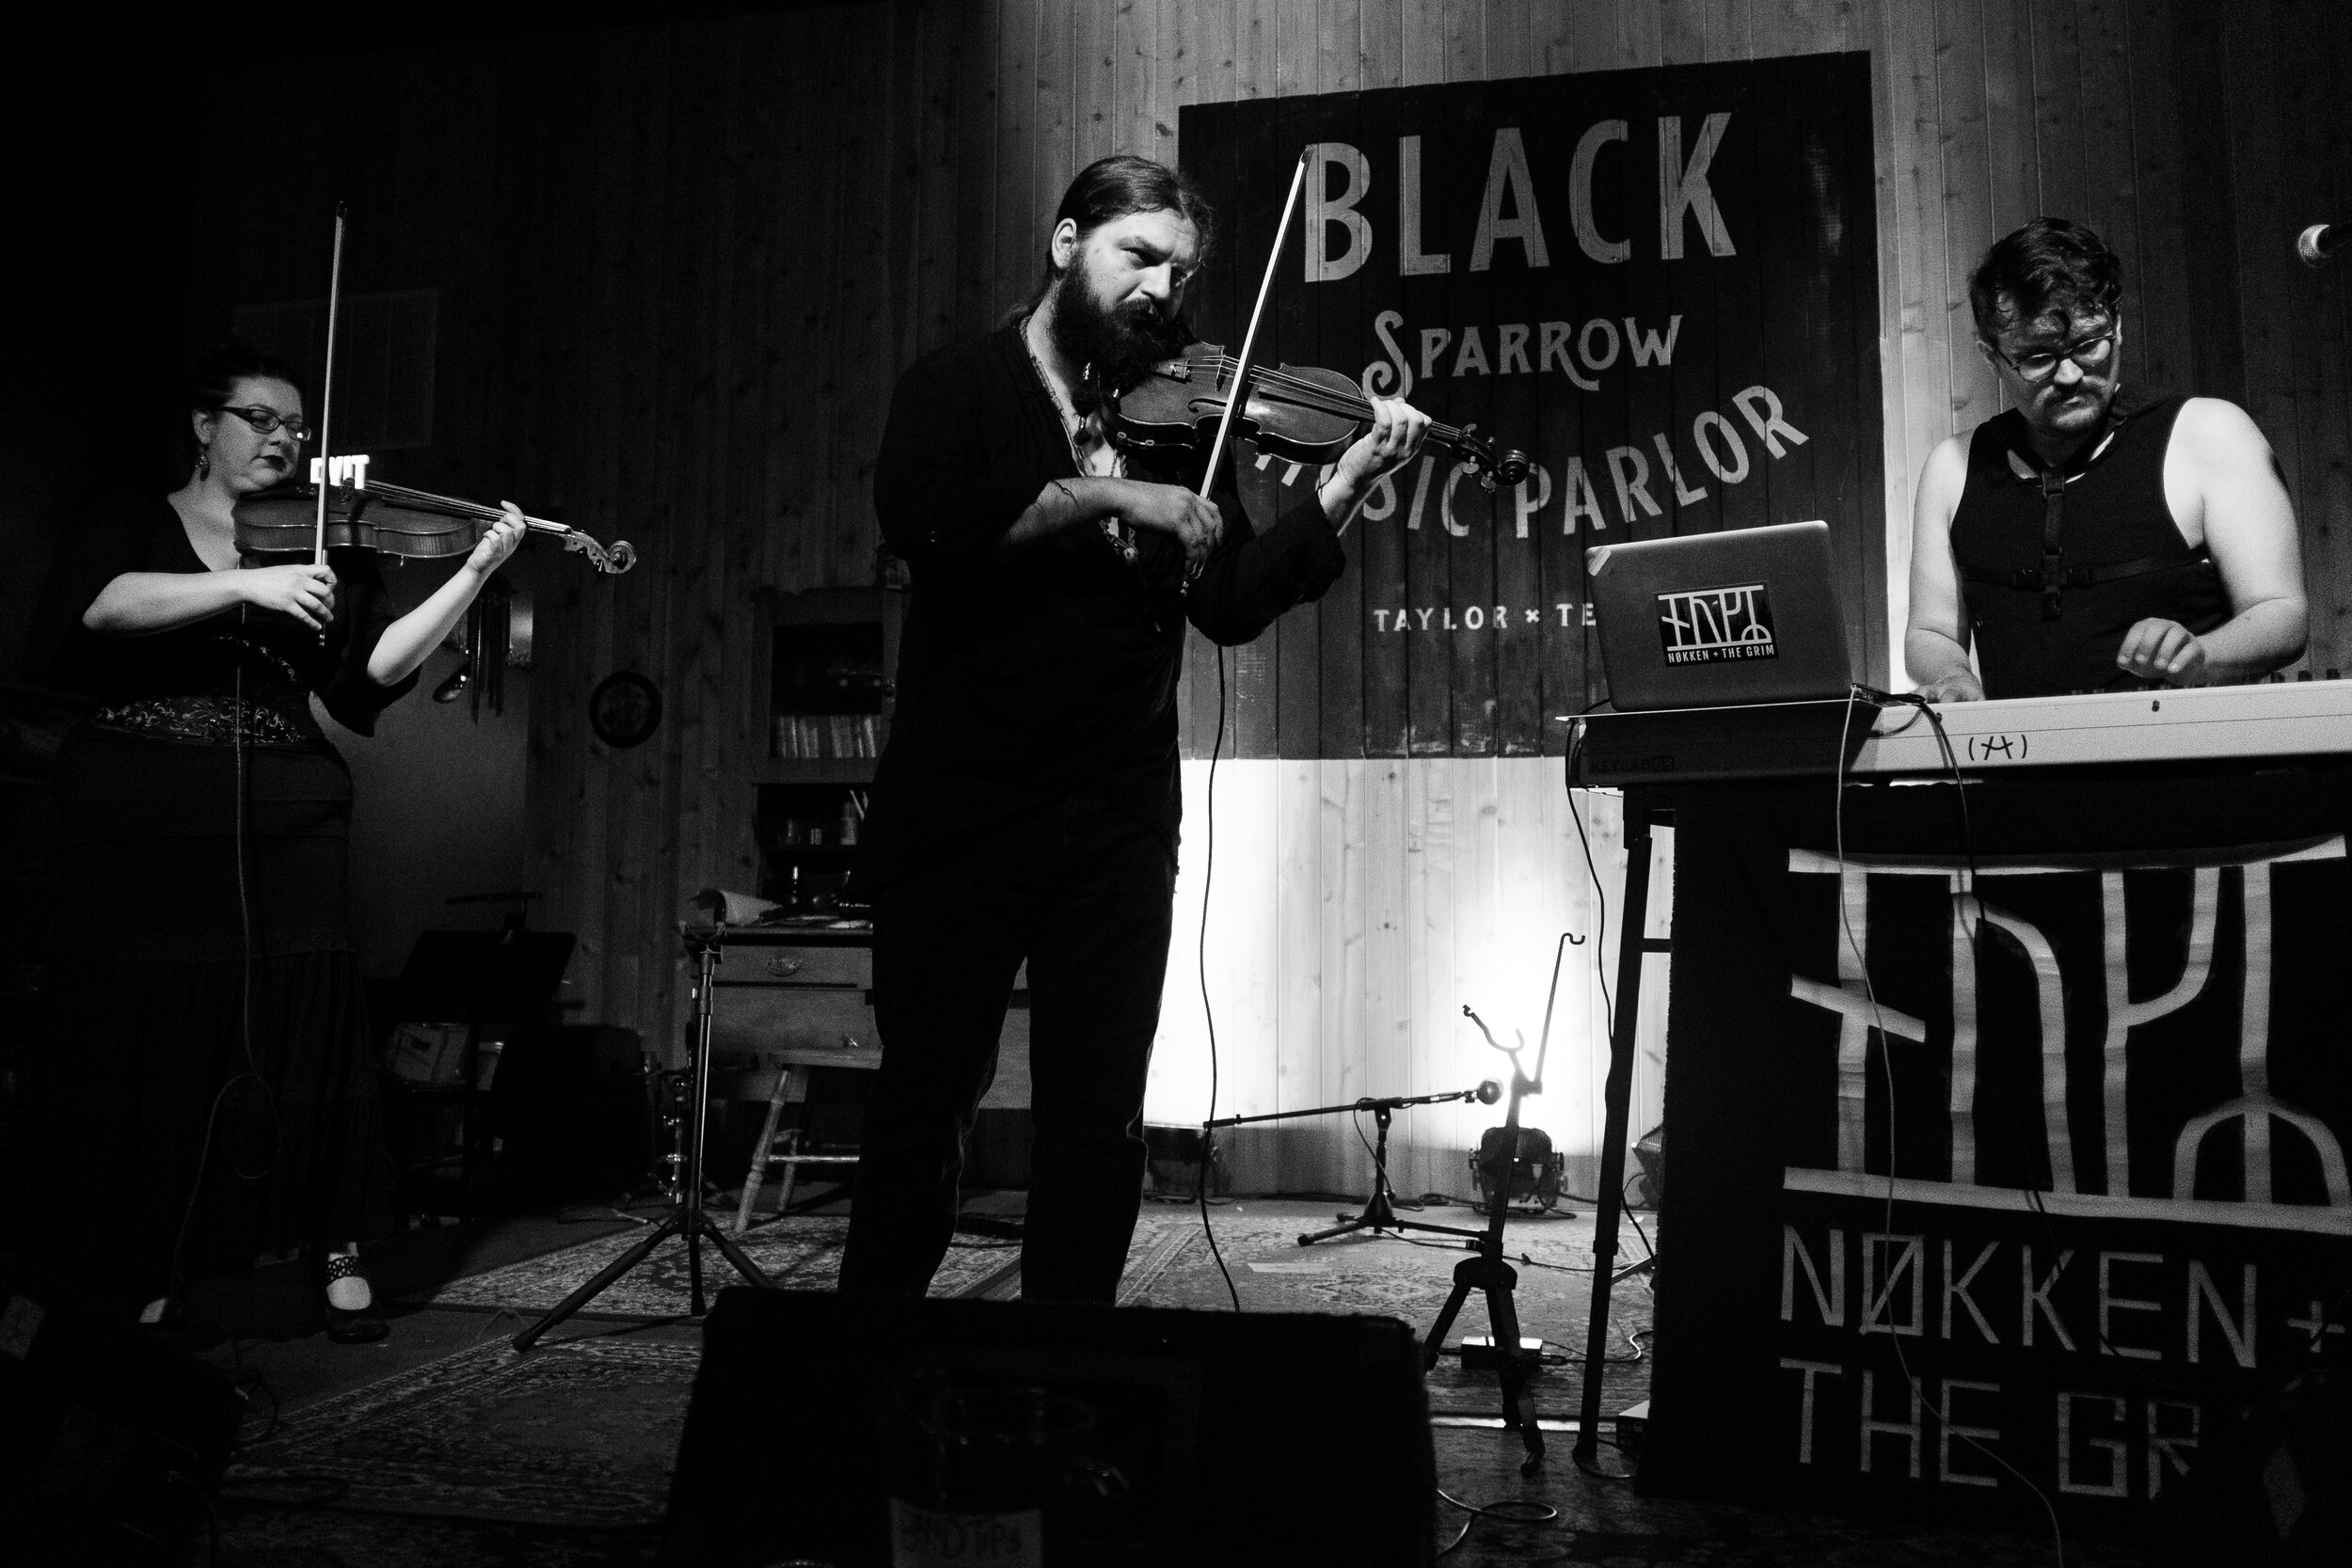 Black Sparrow Music Parlor